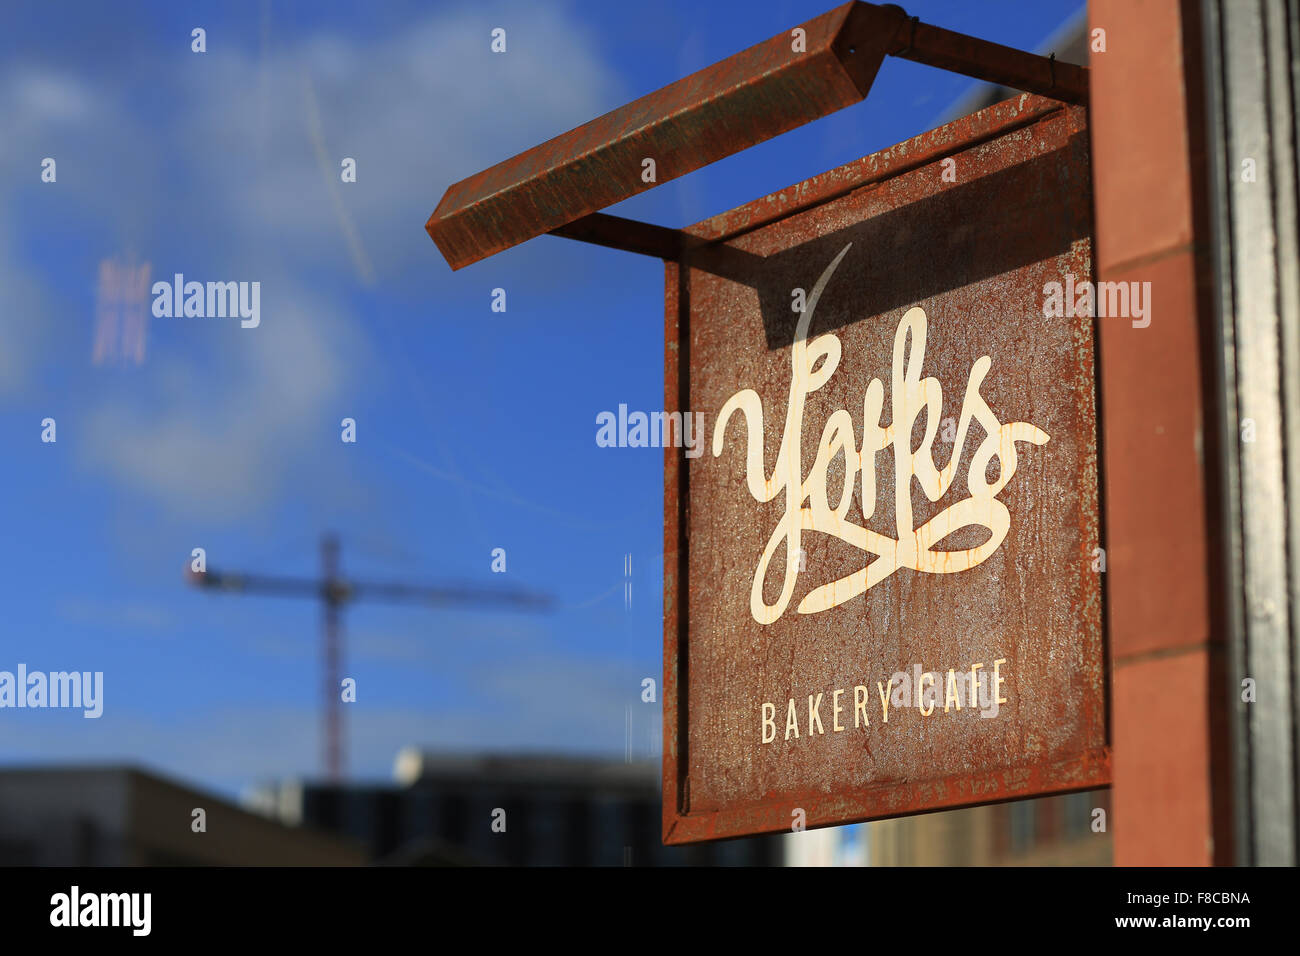 Yorks Bakery Cafe Birmingham Foto de stock